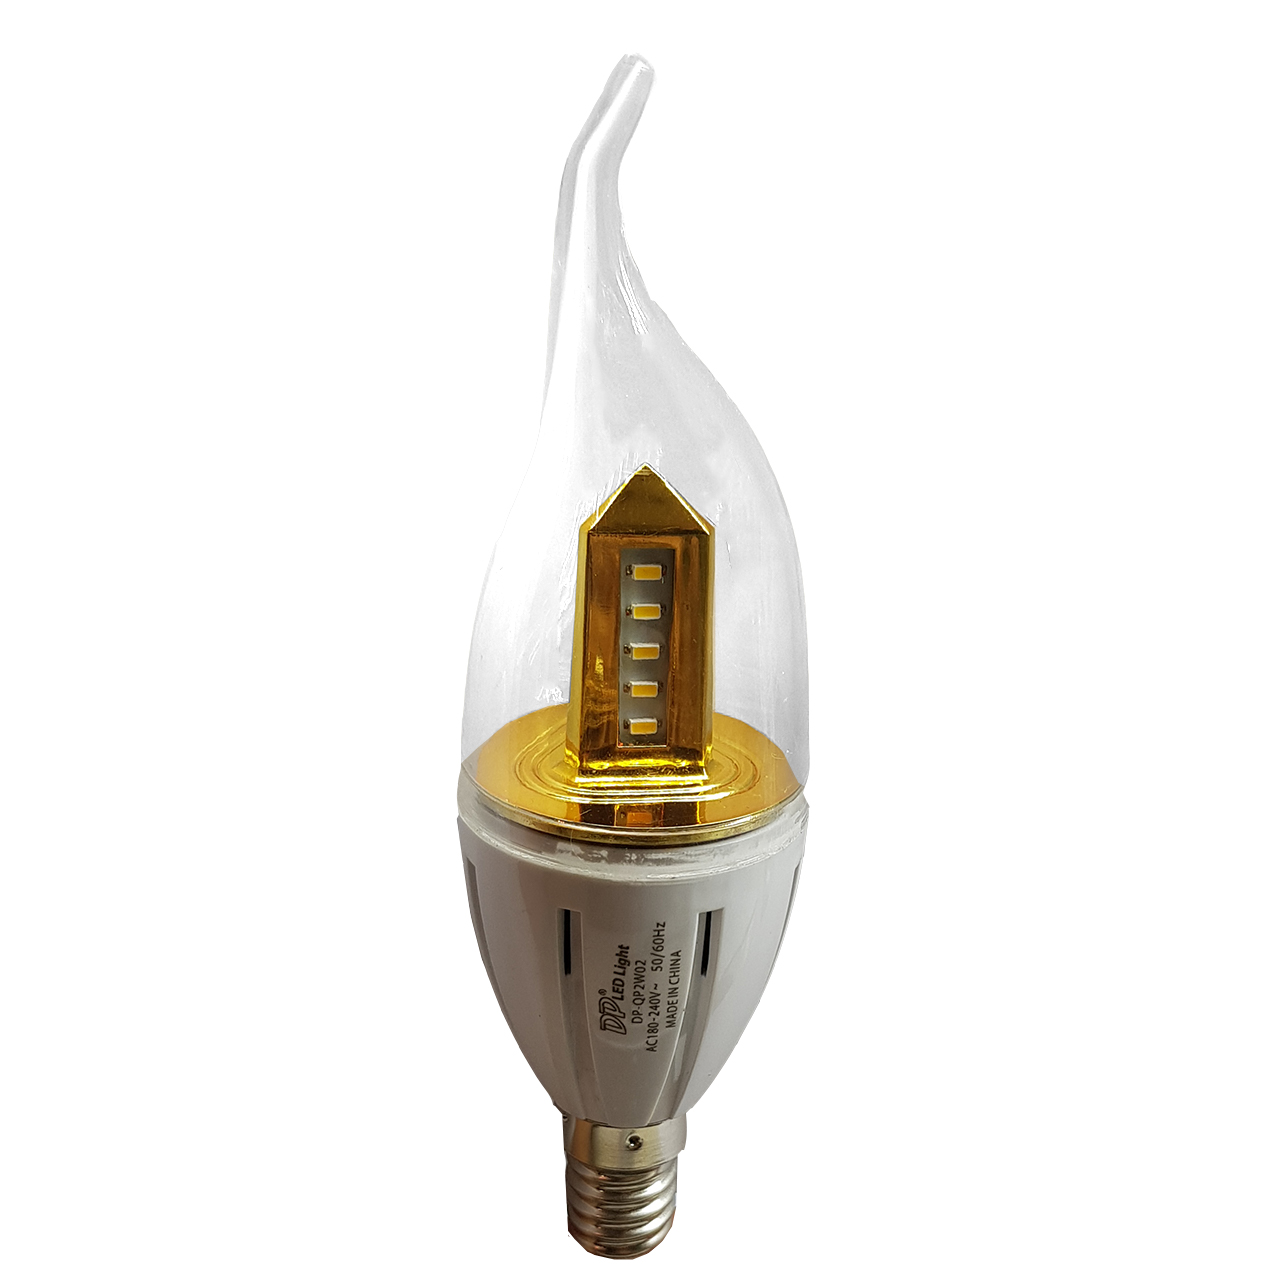 لامپ شمعی 2 وات دی پی مدل DP-QP2W02 پایه E14 بسته 25 عددی